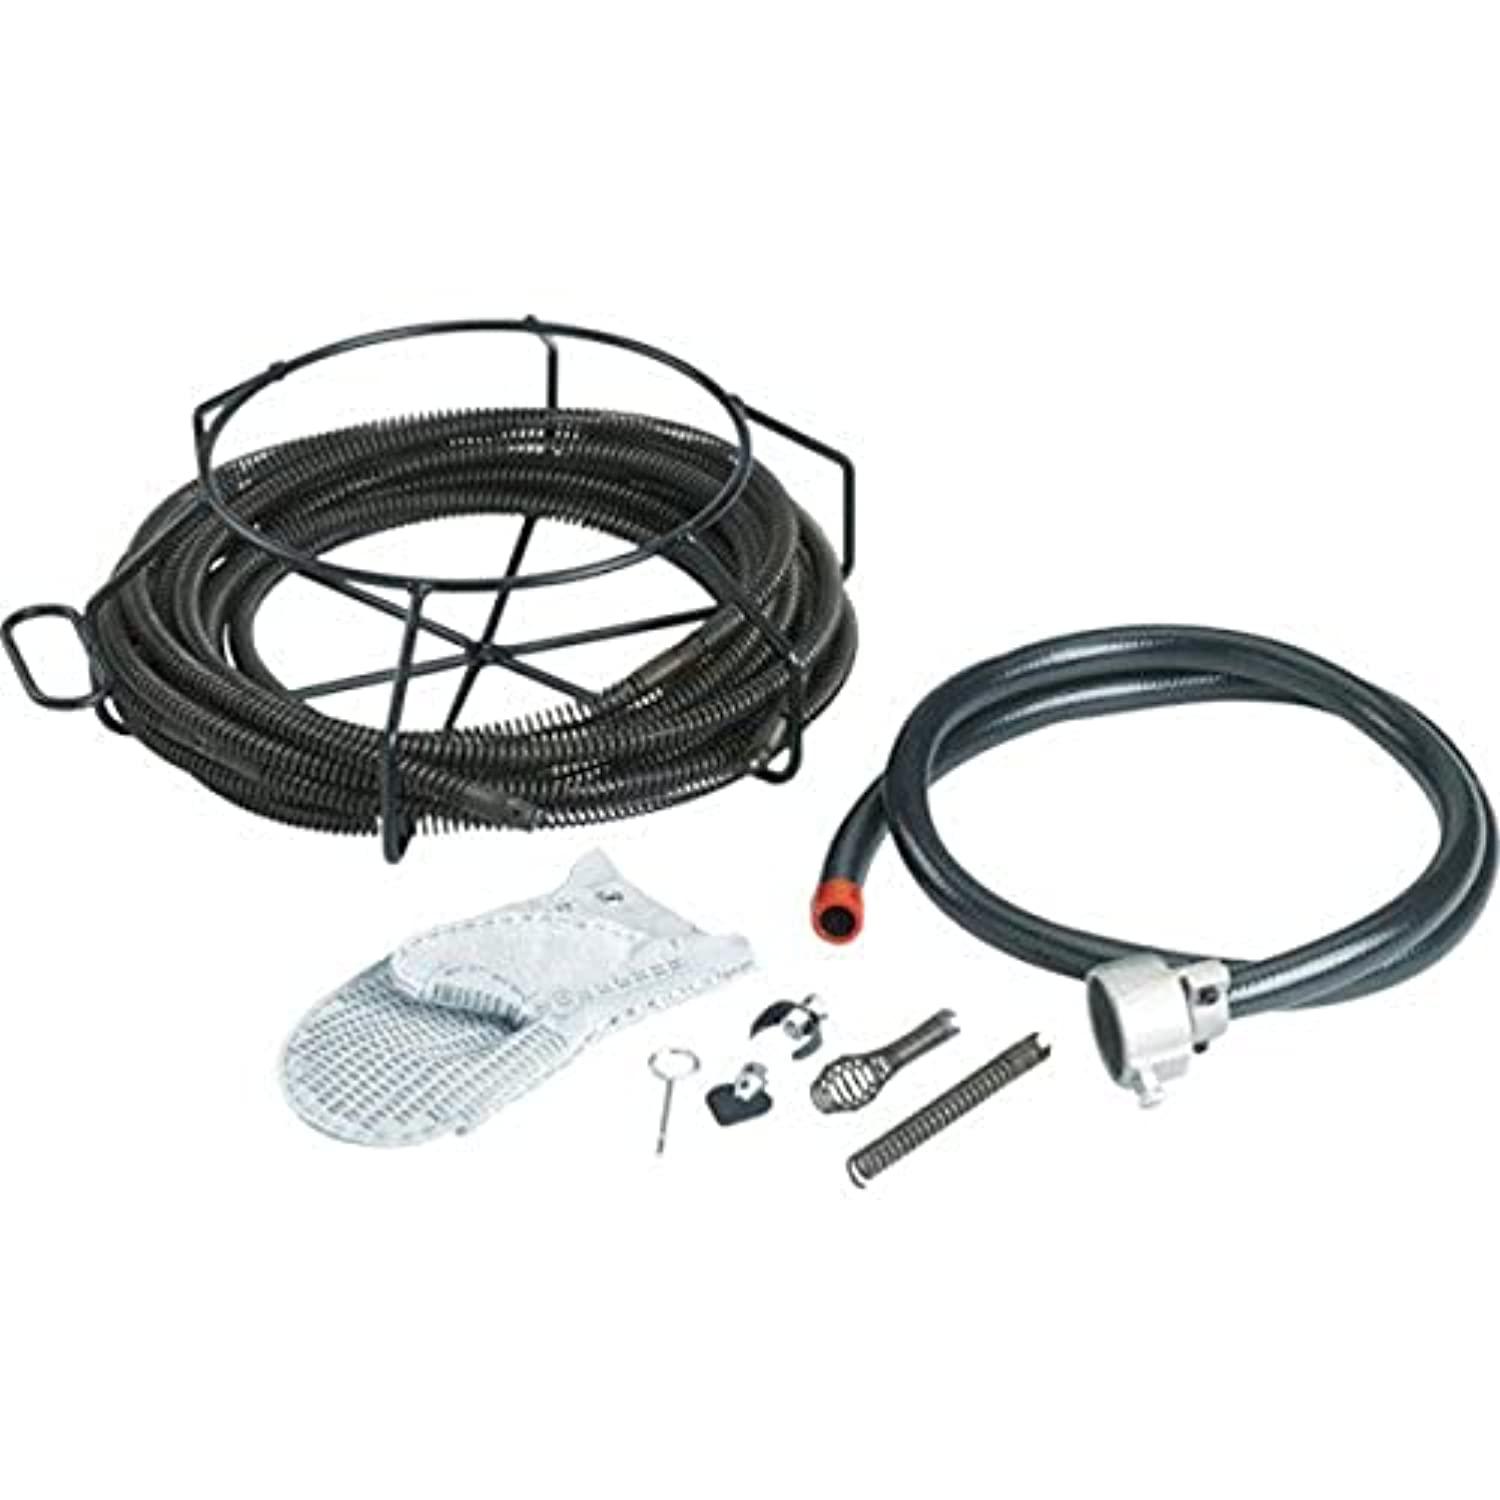 Ridgid drain cleaning cable kit, k-50-8/59000